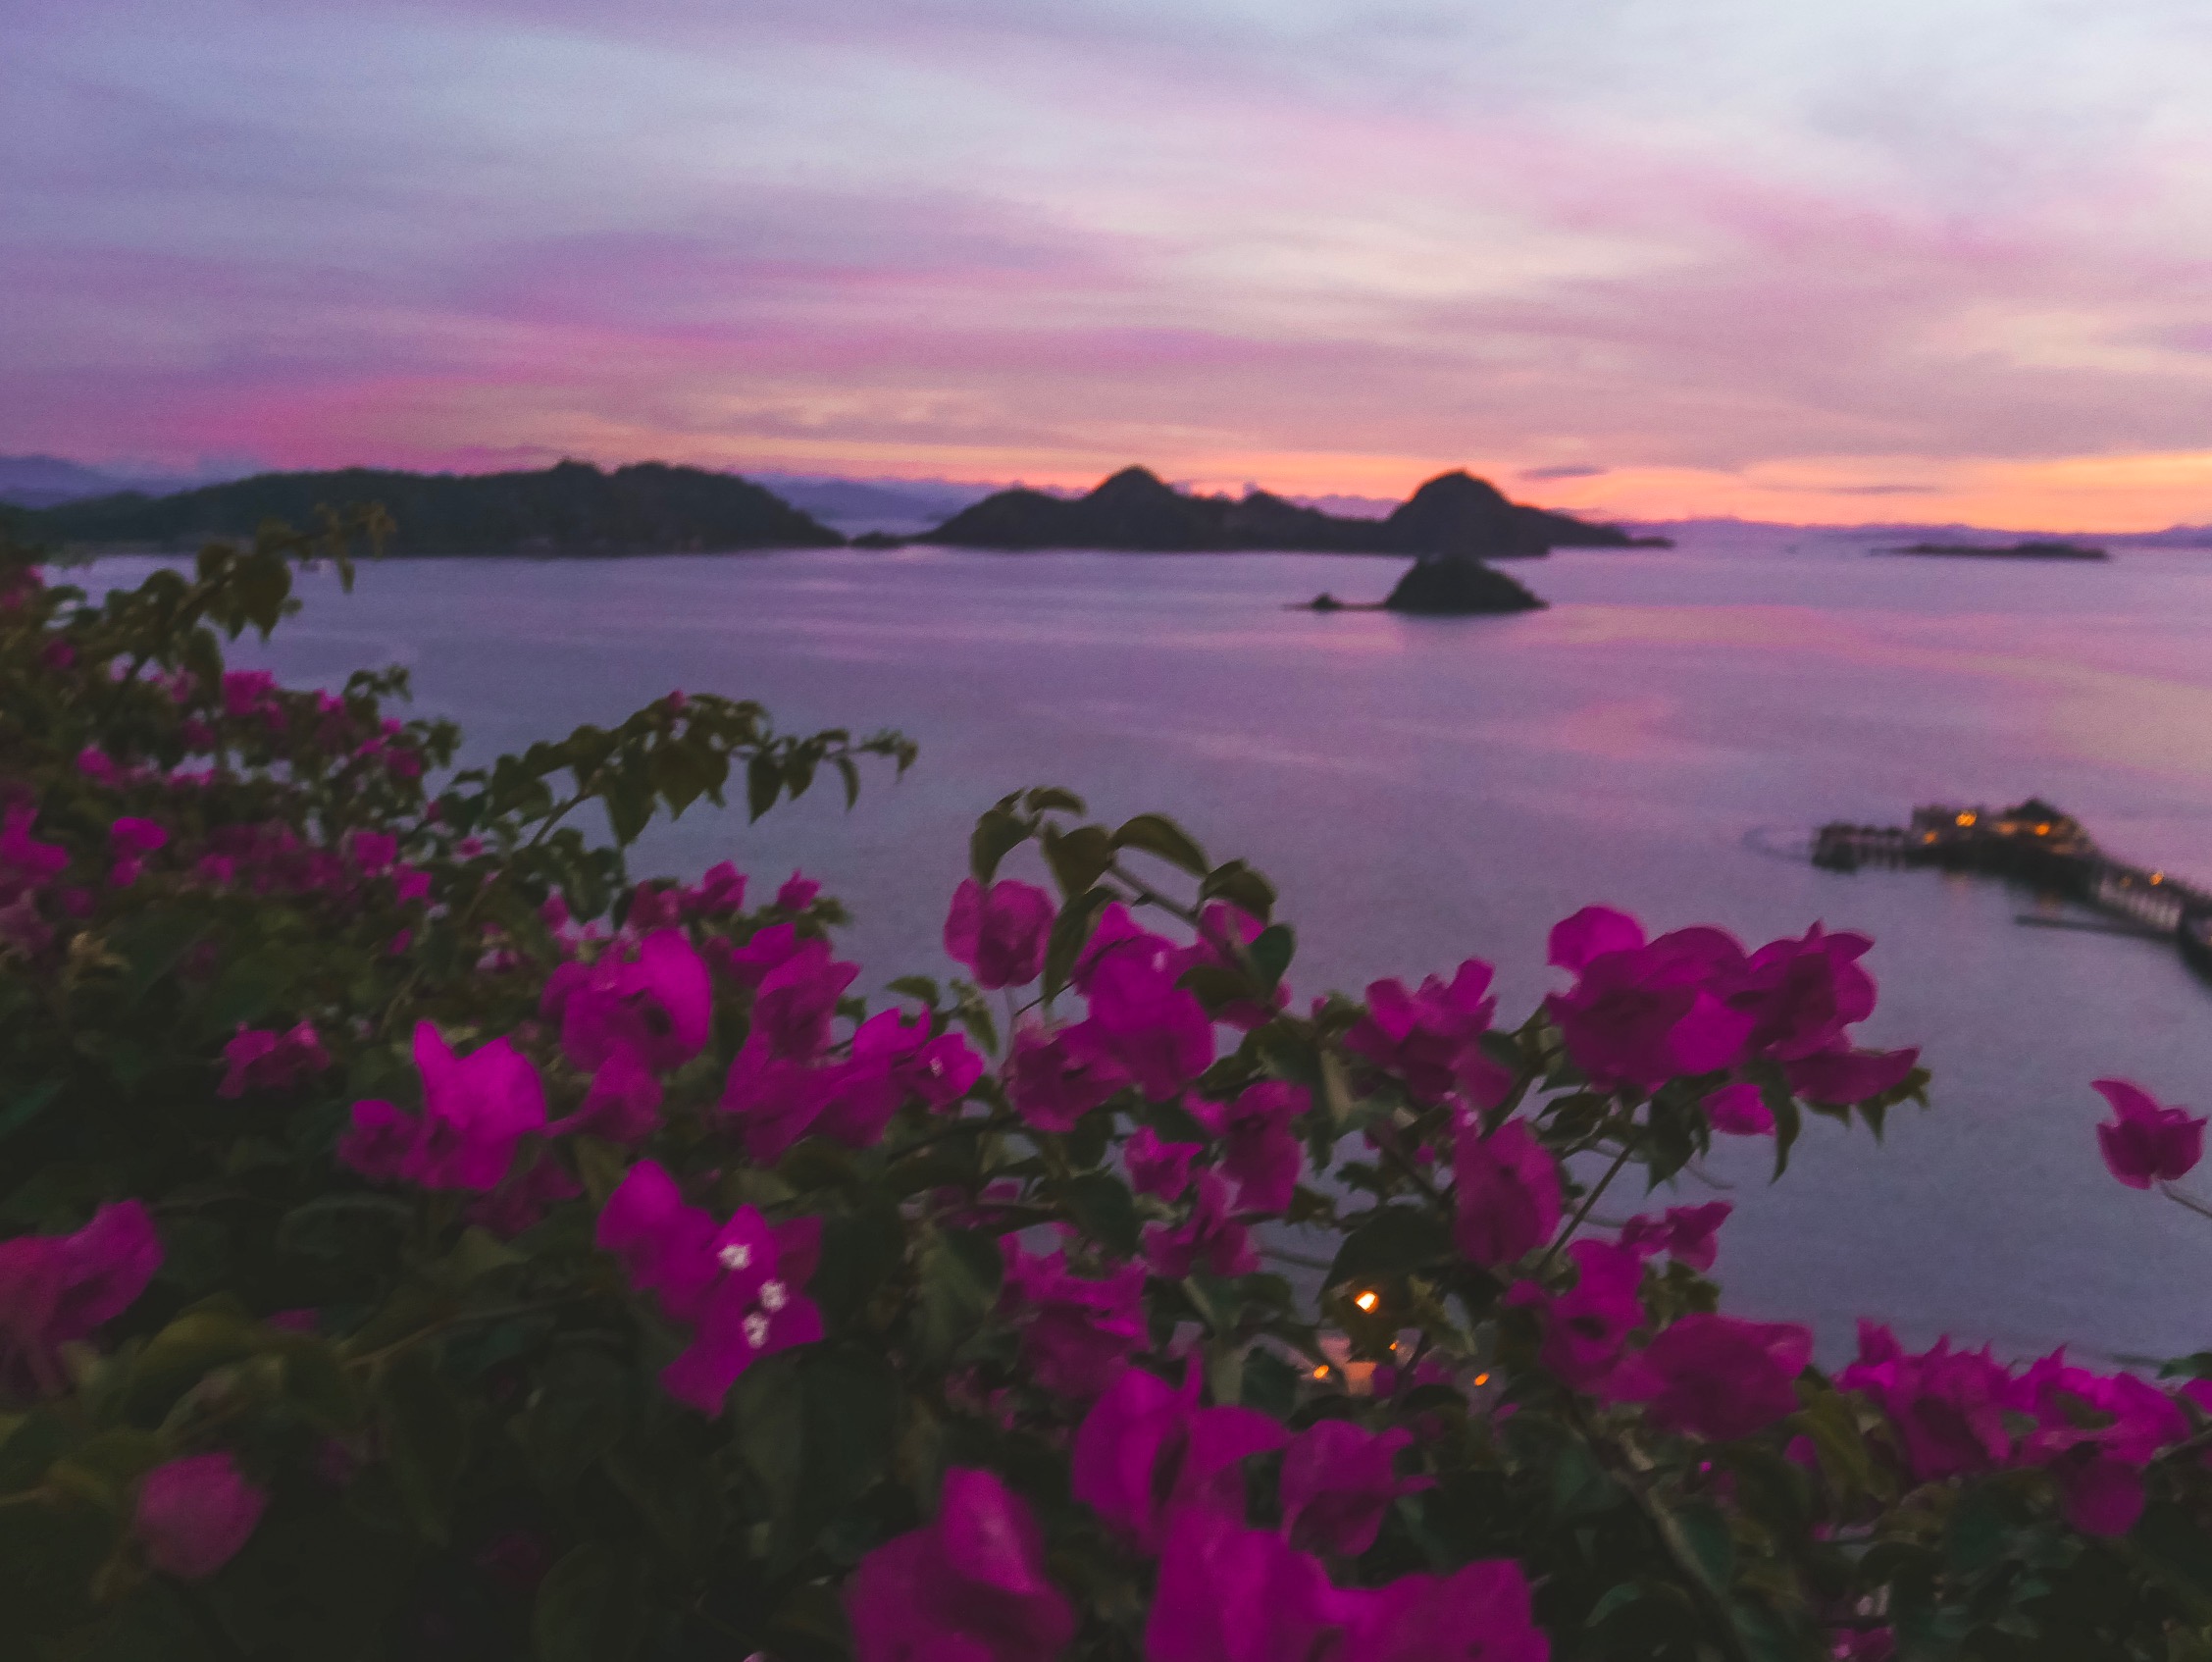 Ayana Resort Pink Sunset - Labuan Bajo - Flores - Indonesia